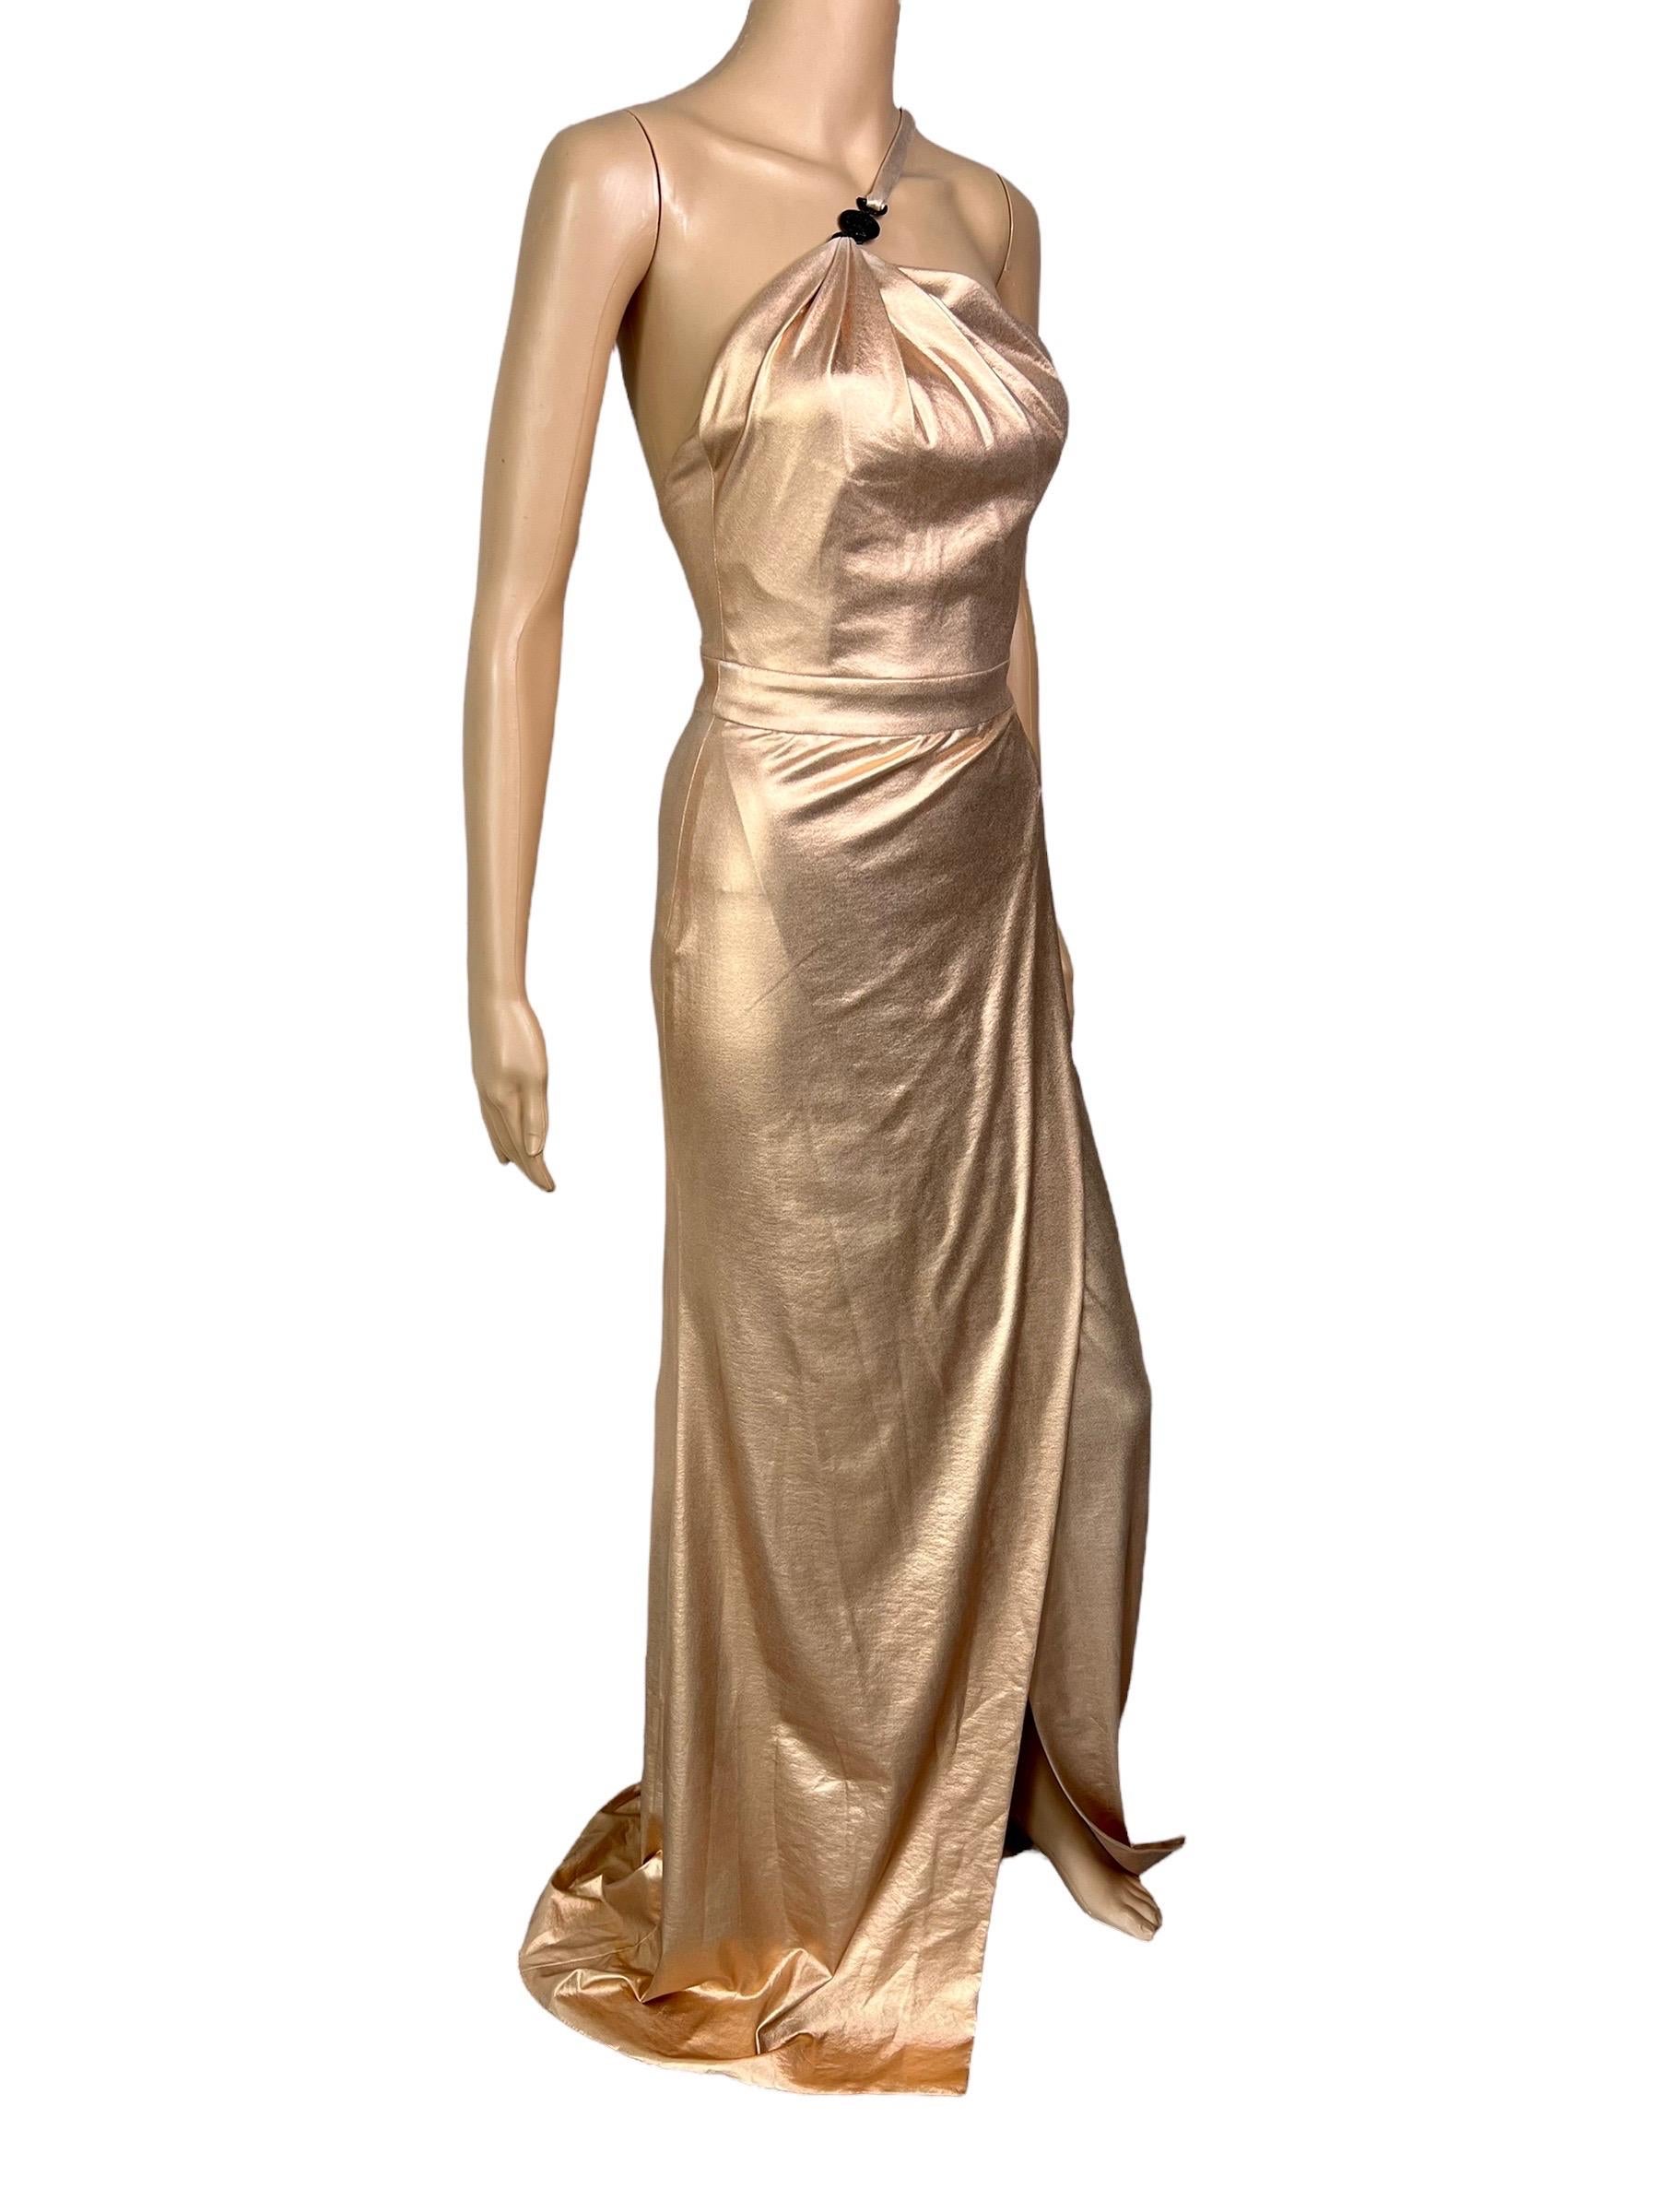 Versace c.2013 Wet Liquid Look Bodycon Metallic Rose Gold Evening Dress Gown In Excellent Condition For Sale In Naples, FL